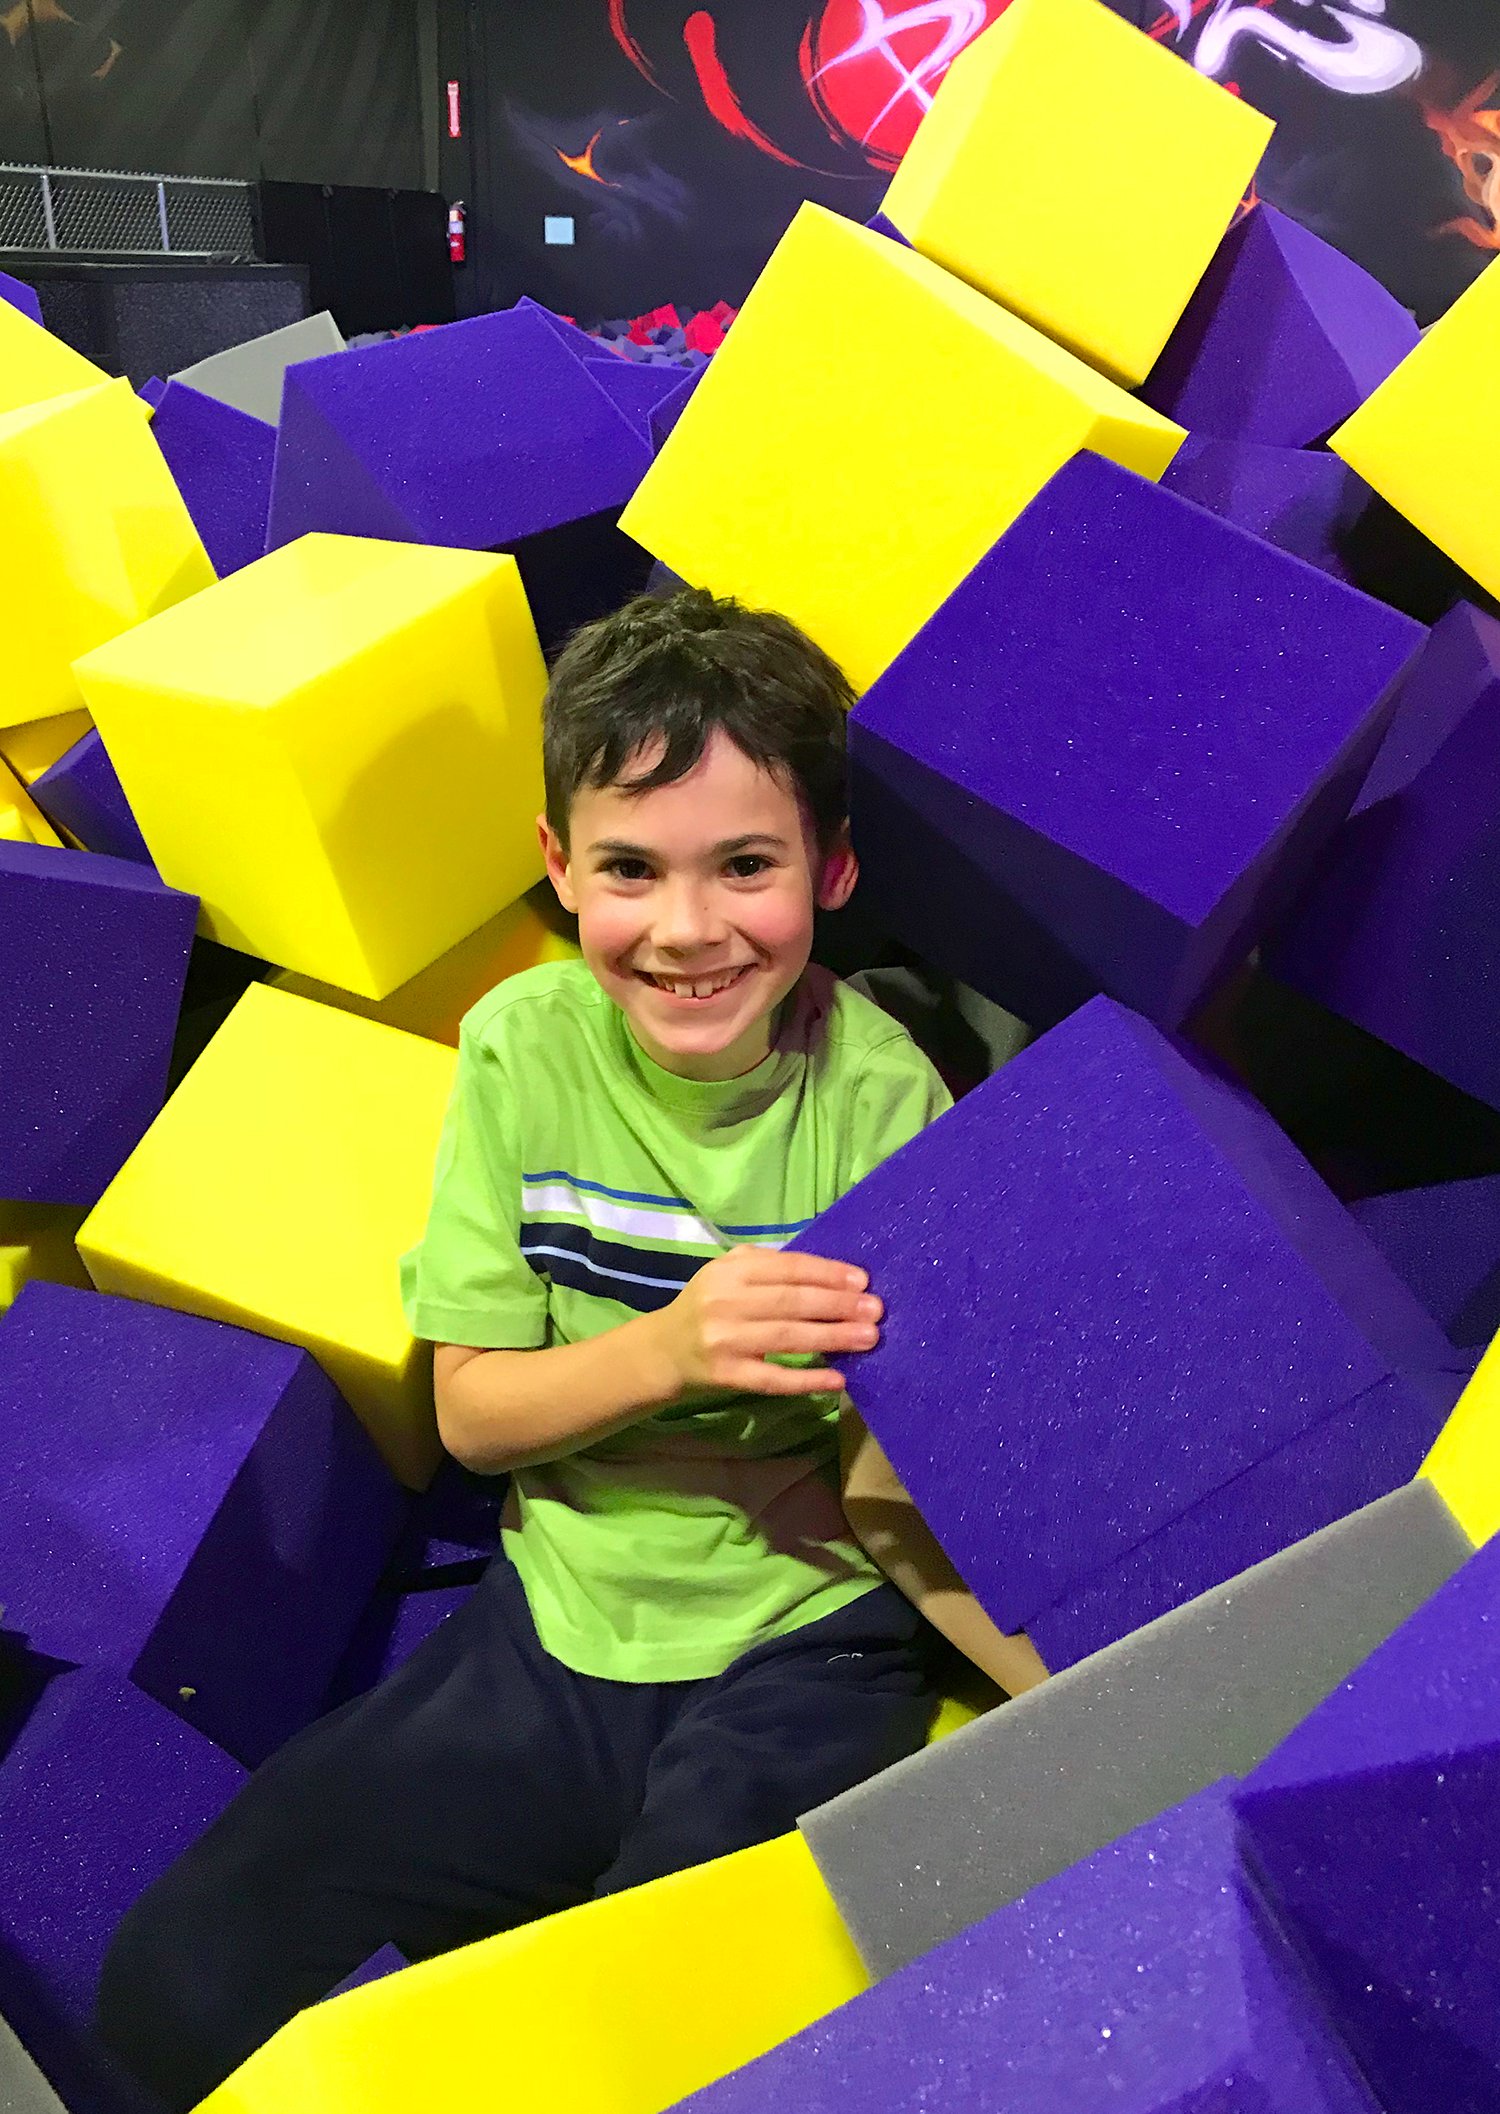 mojo dojo foam pit with smiling boy inside playing